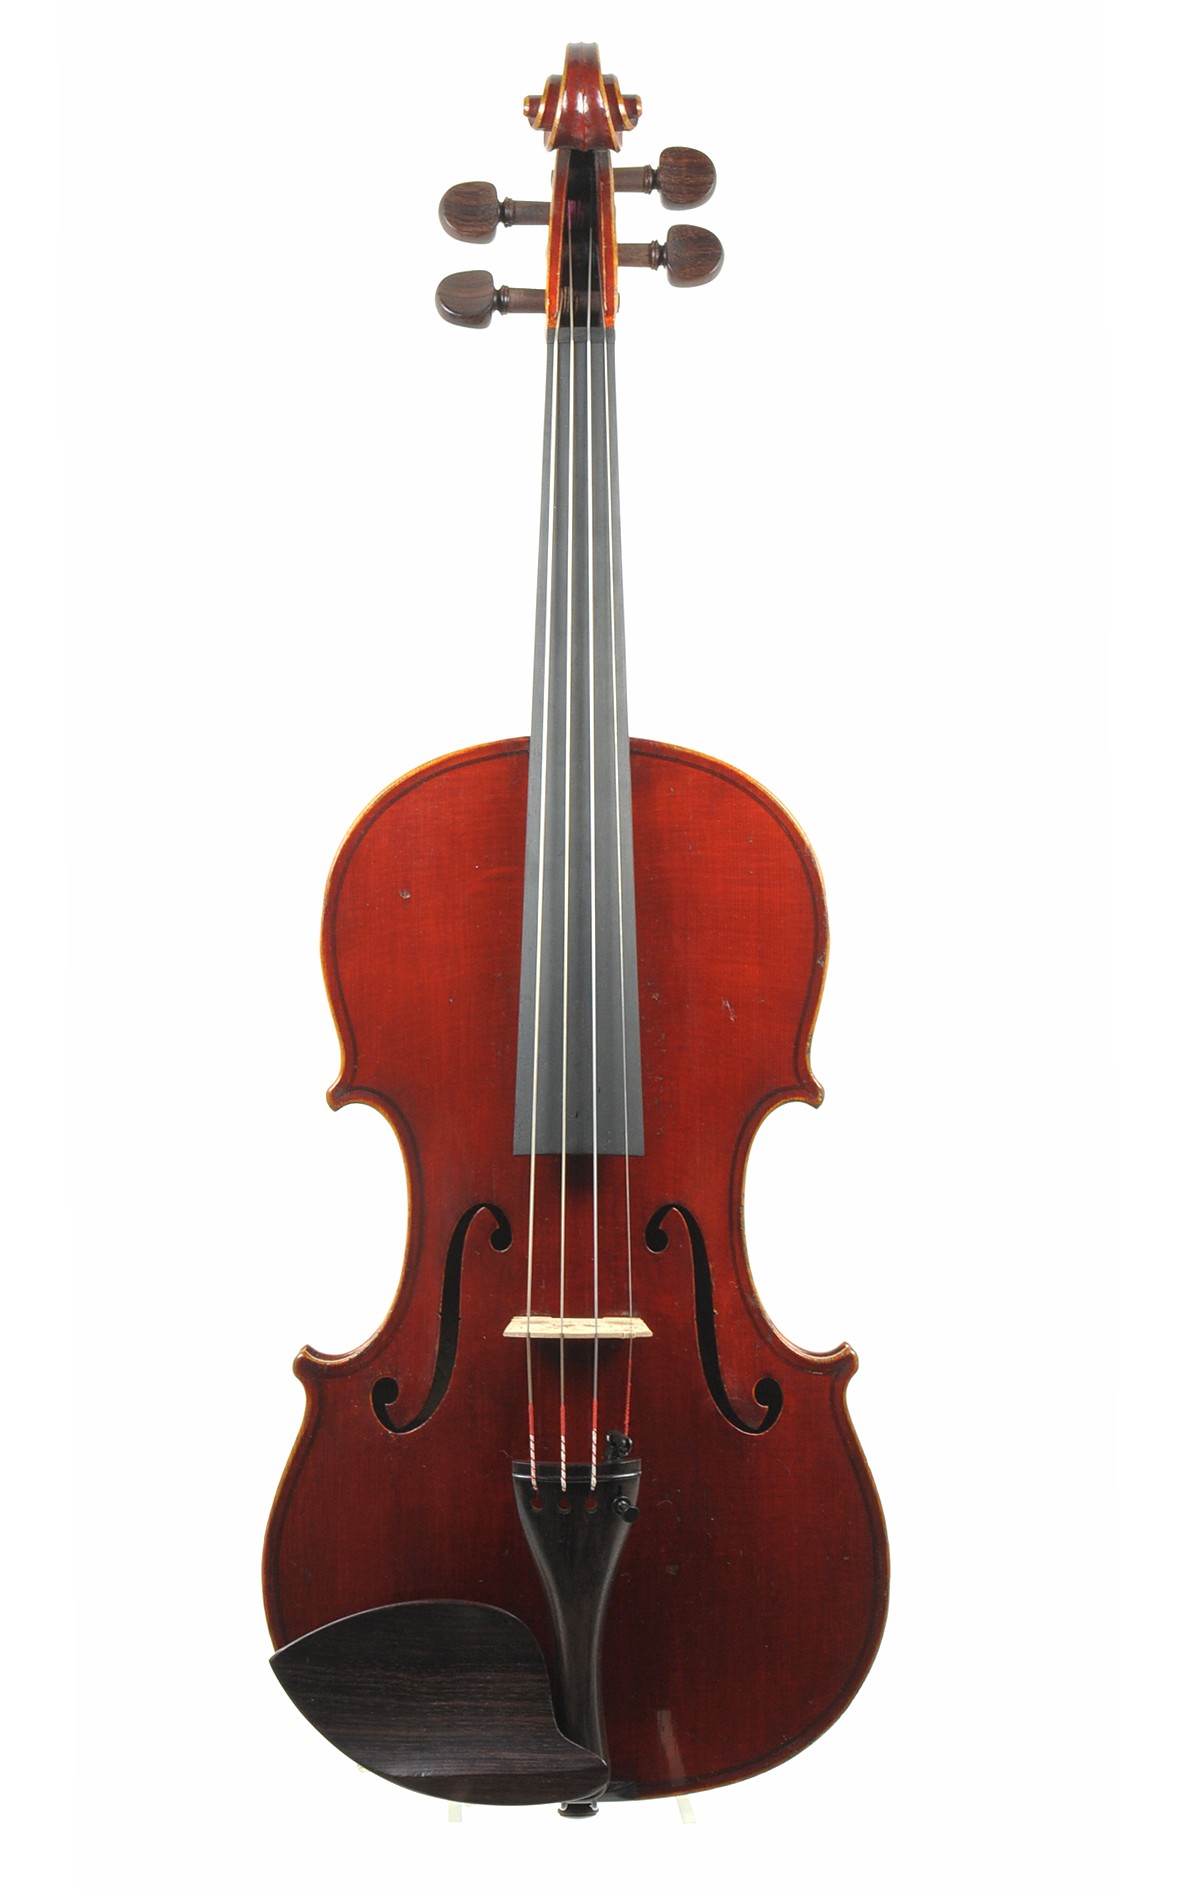 Imperial violin by C. Schuster + Sohn